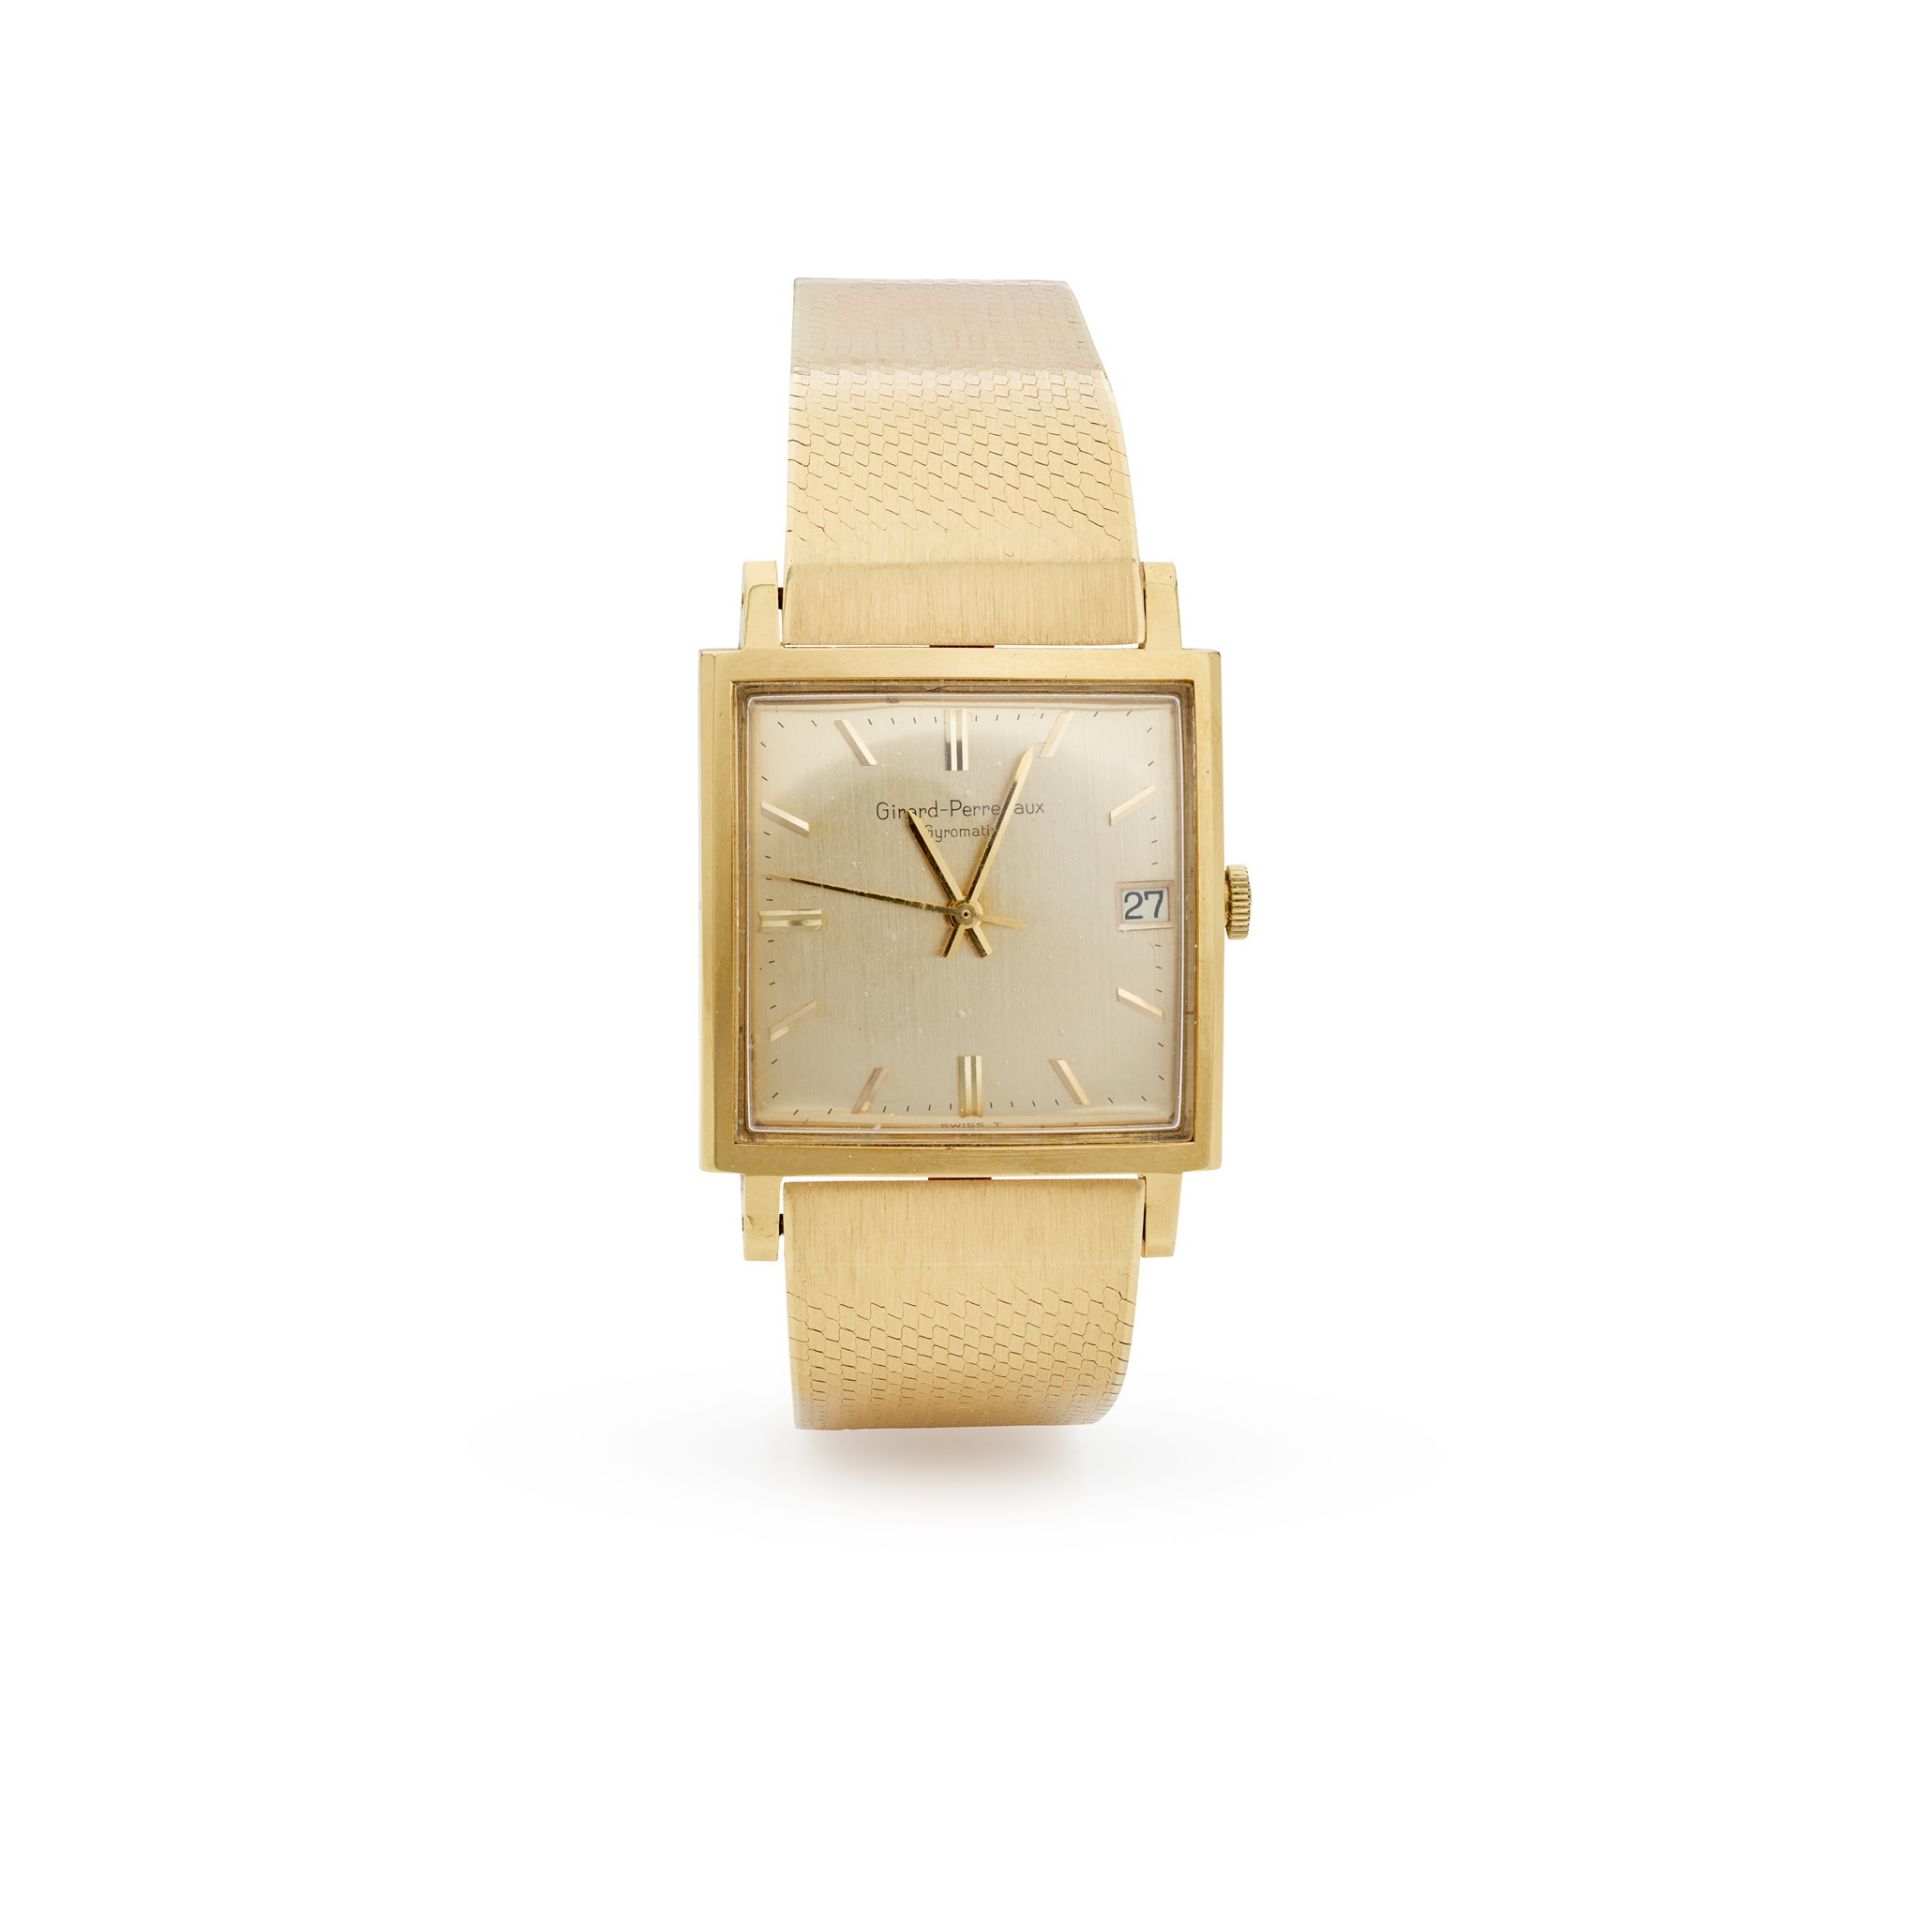 Girard-Perregaux: a late 1970s dress watch